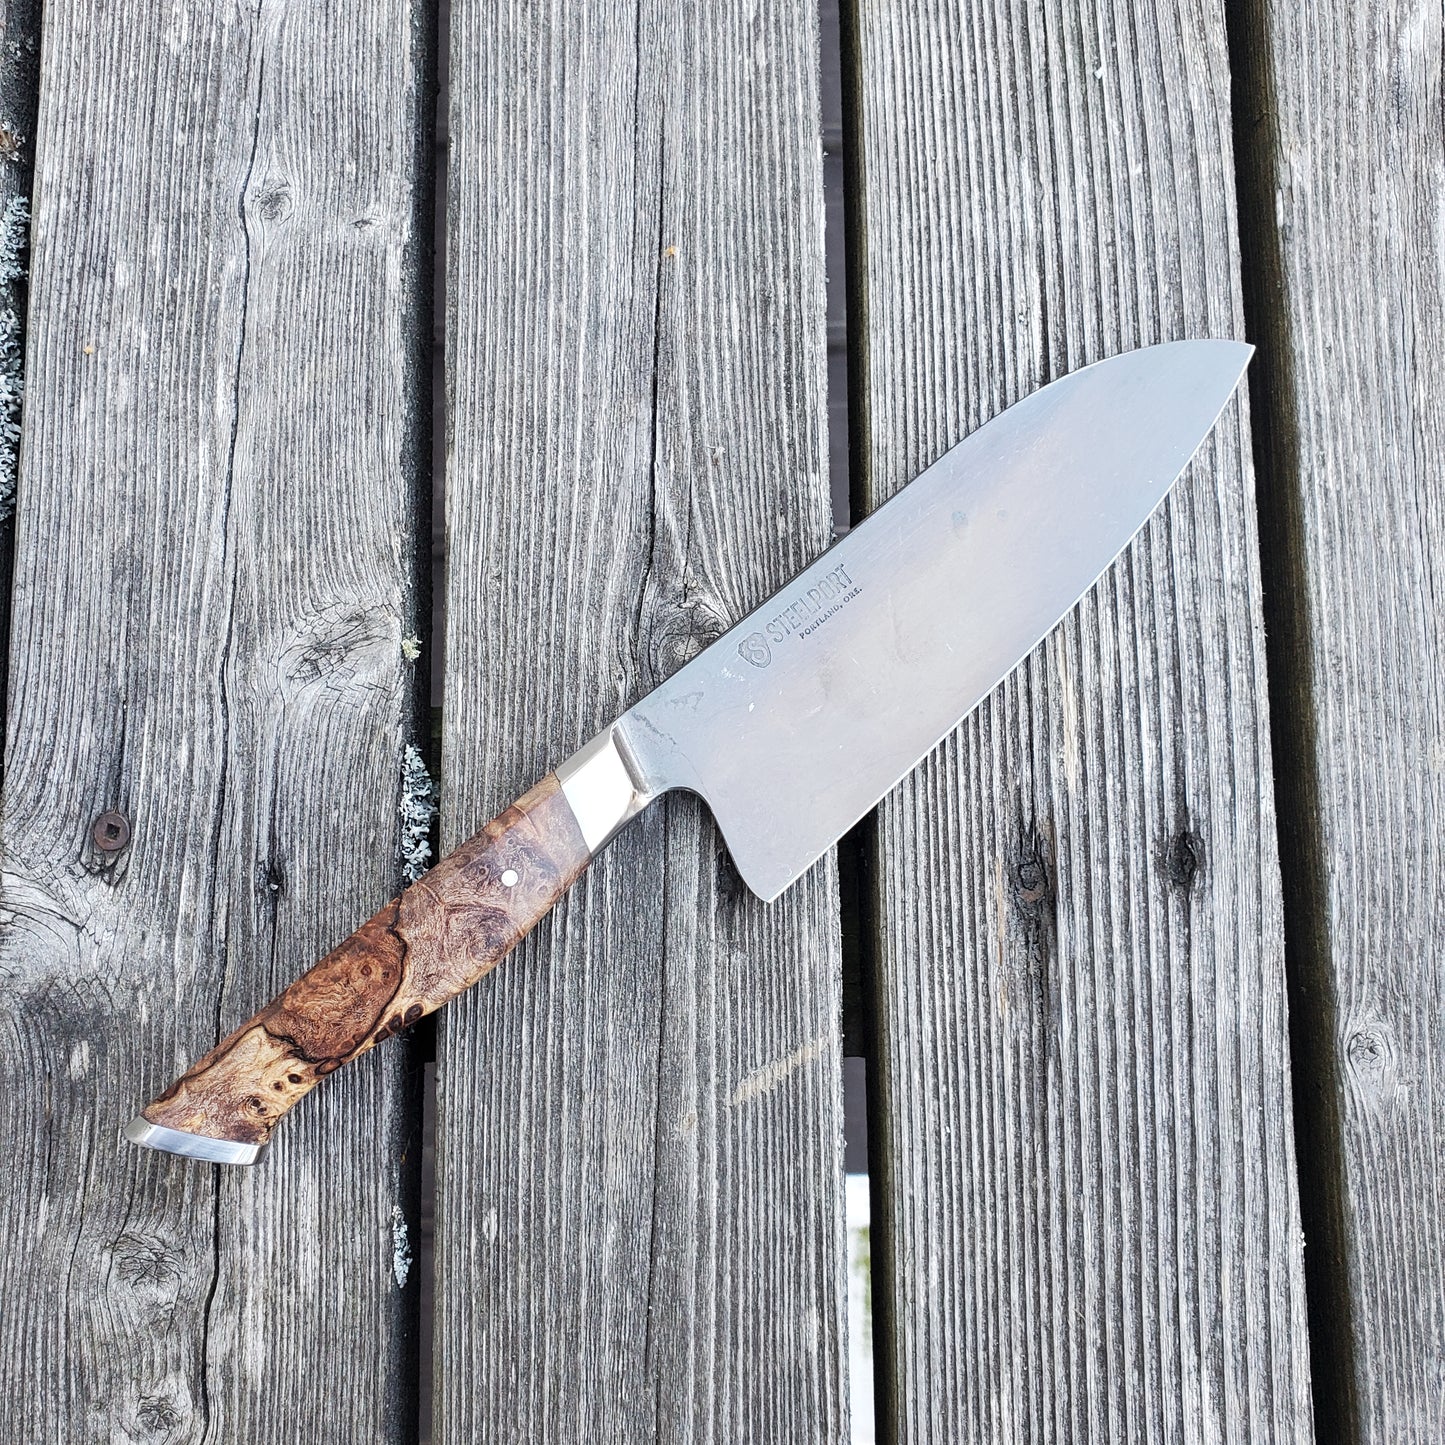 Steelport Knife Co. 6" Chef Knife